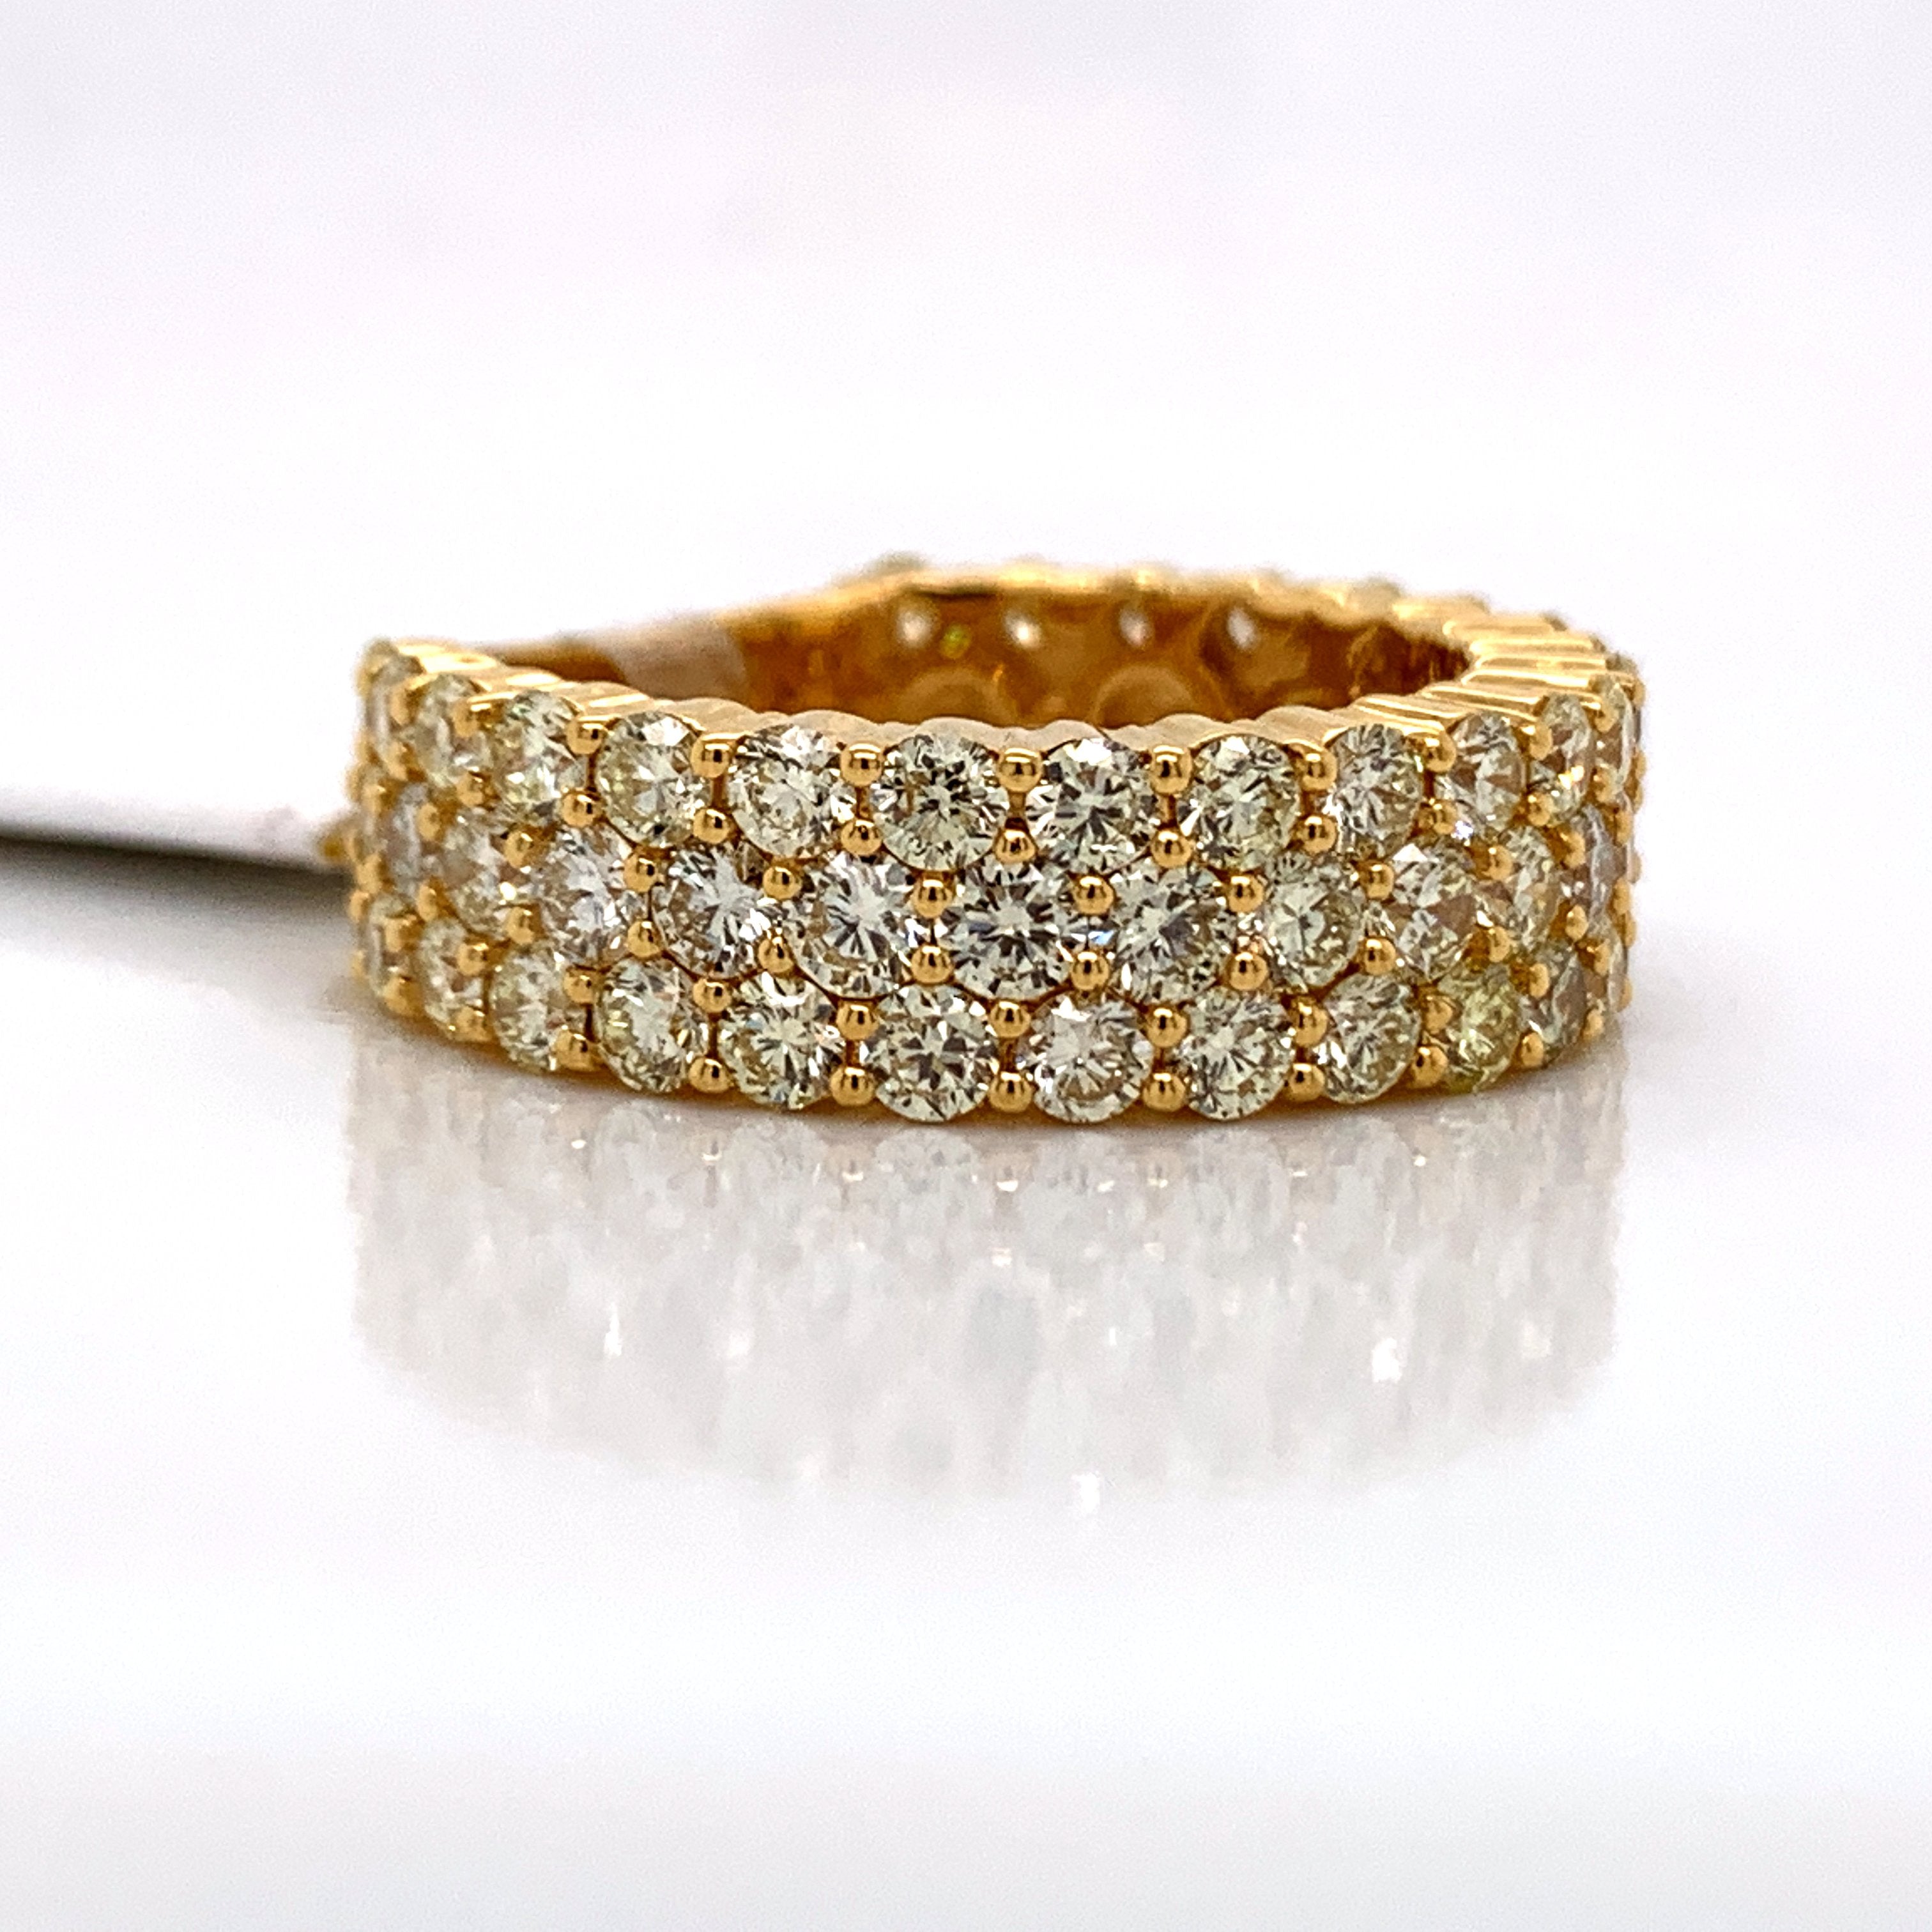 4.72 CT. Diamond Ring in 10K Gold - White Carat Diamonds 